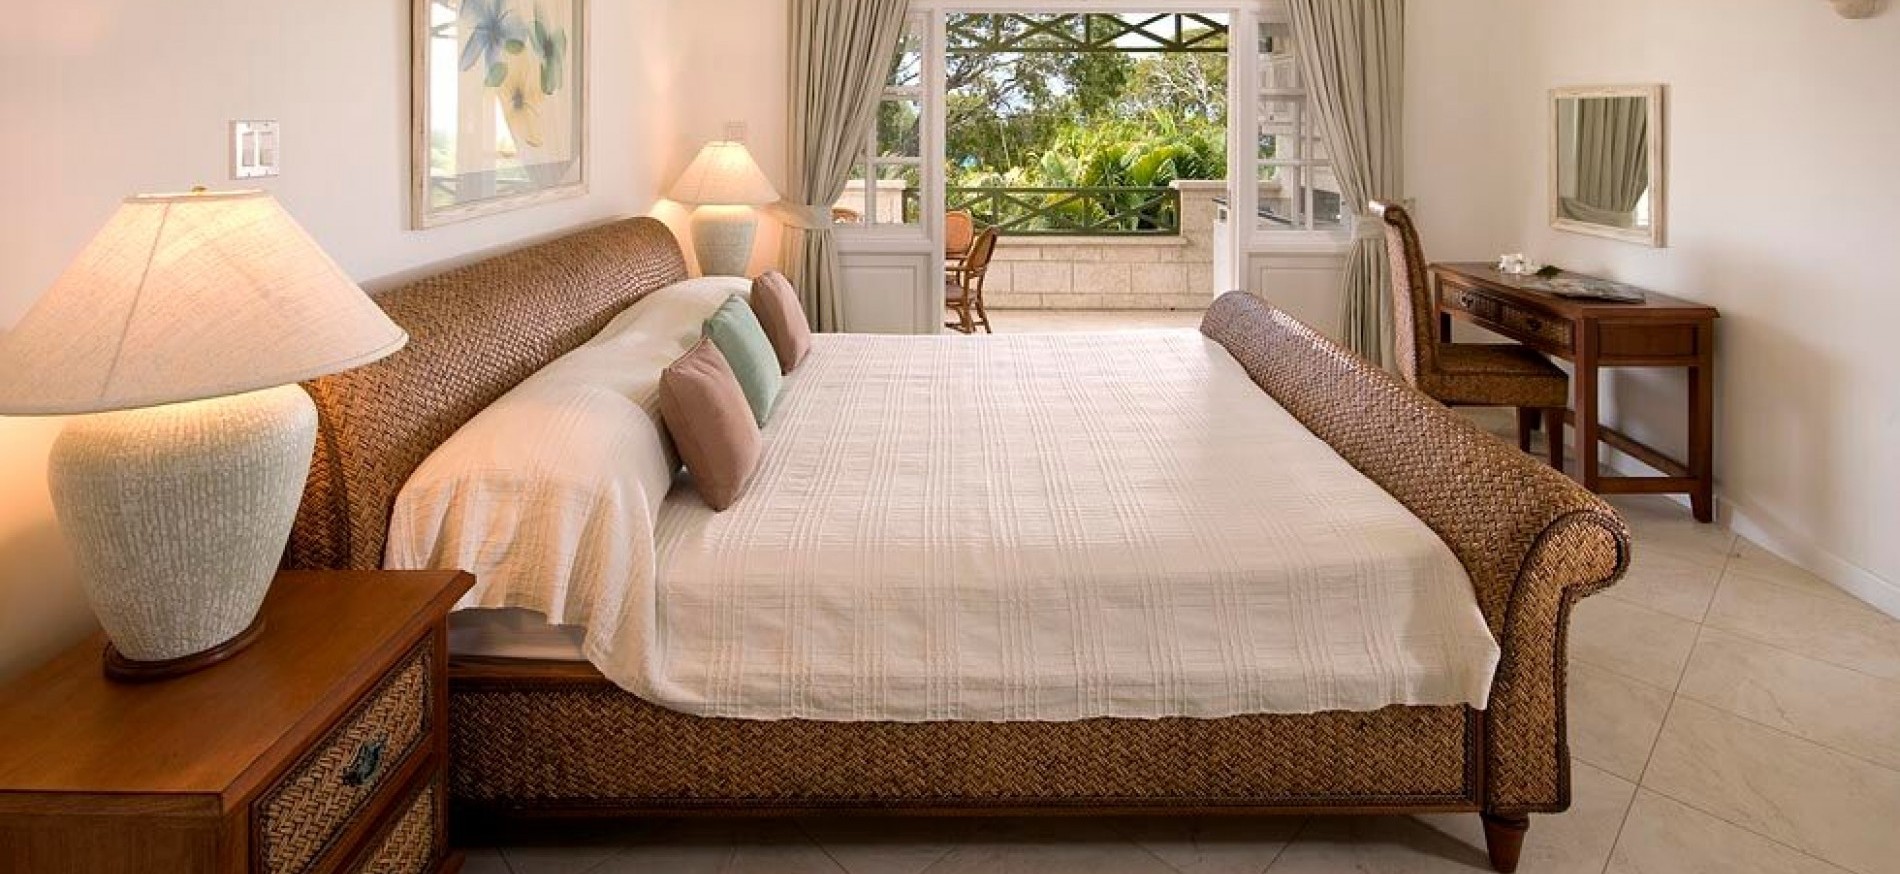 Luxury-villa-Summerland-103-Barbados-Prospect-St-james-3-bedrooms